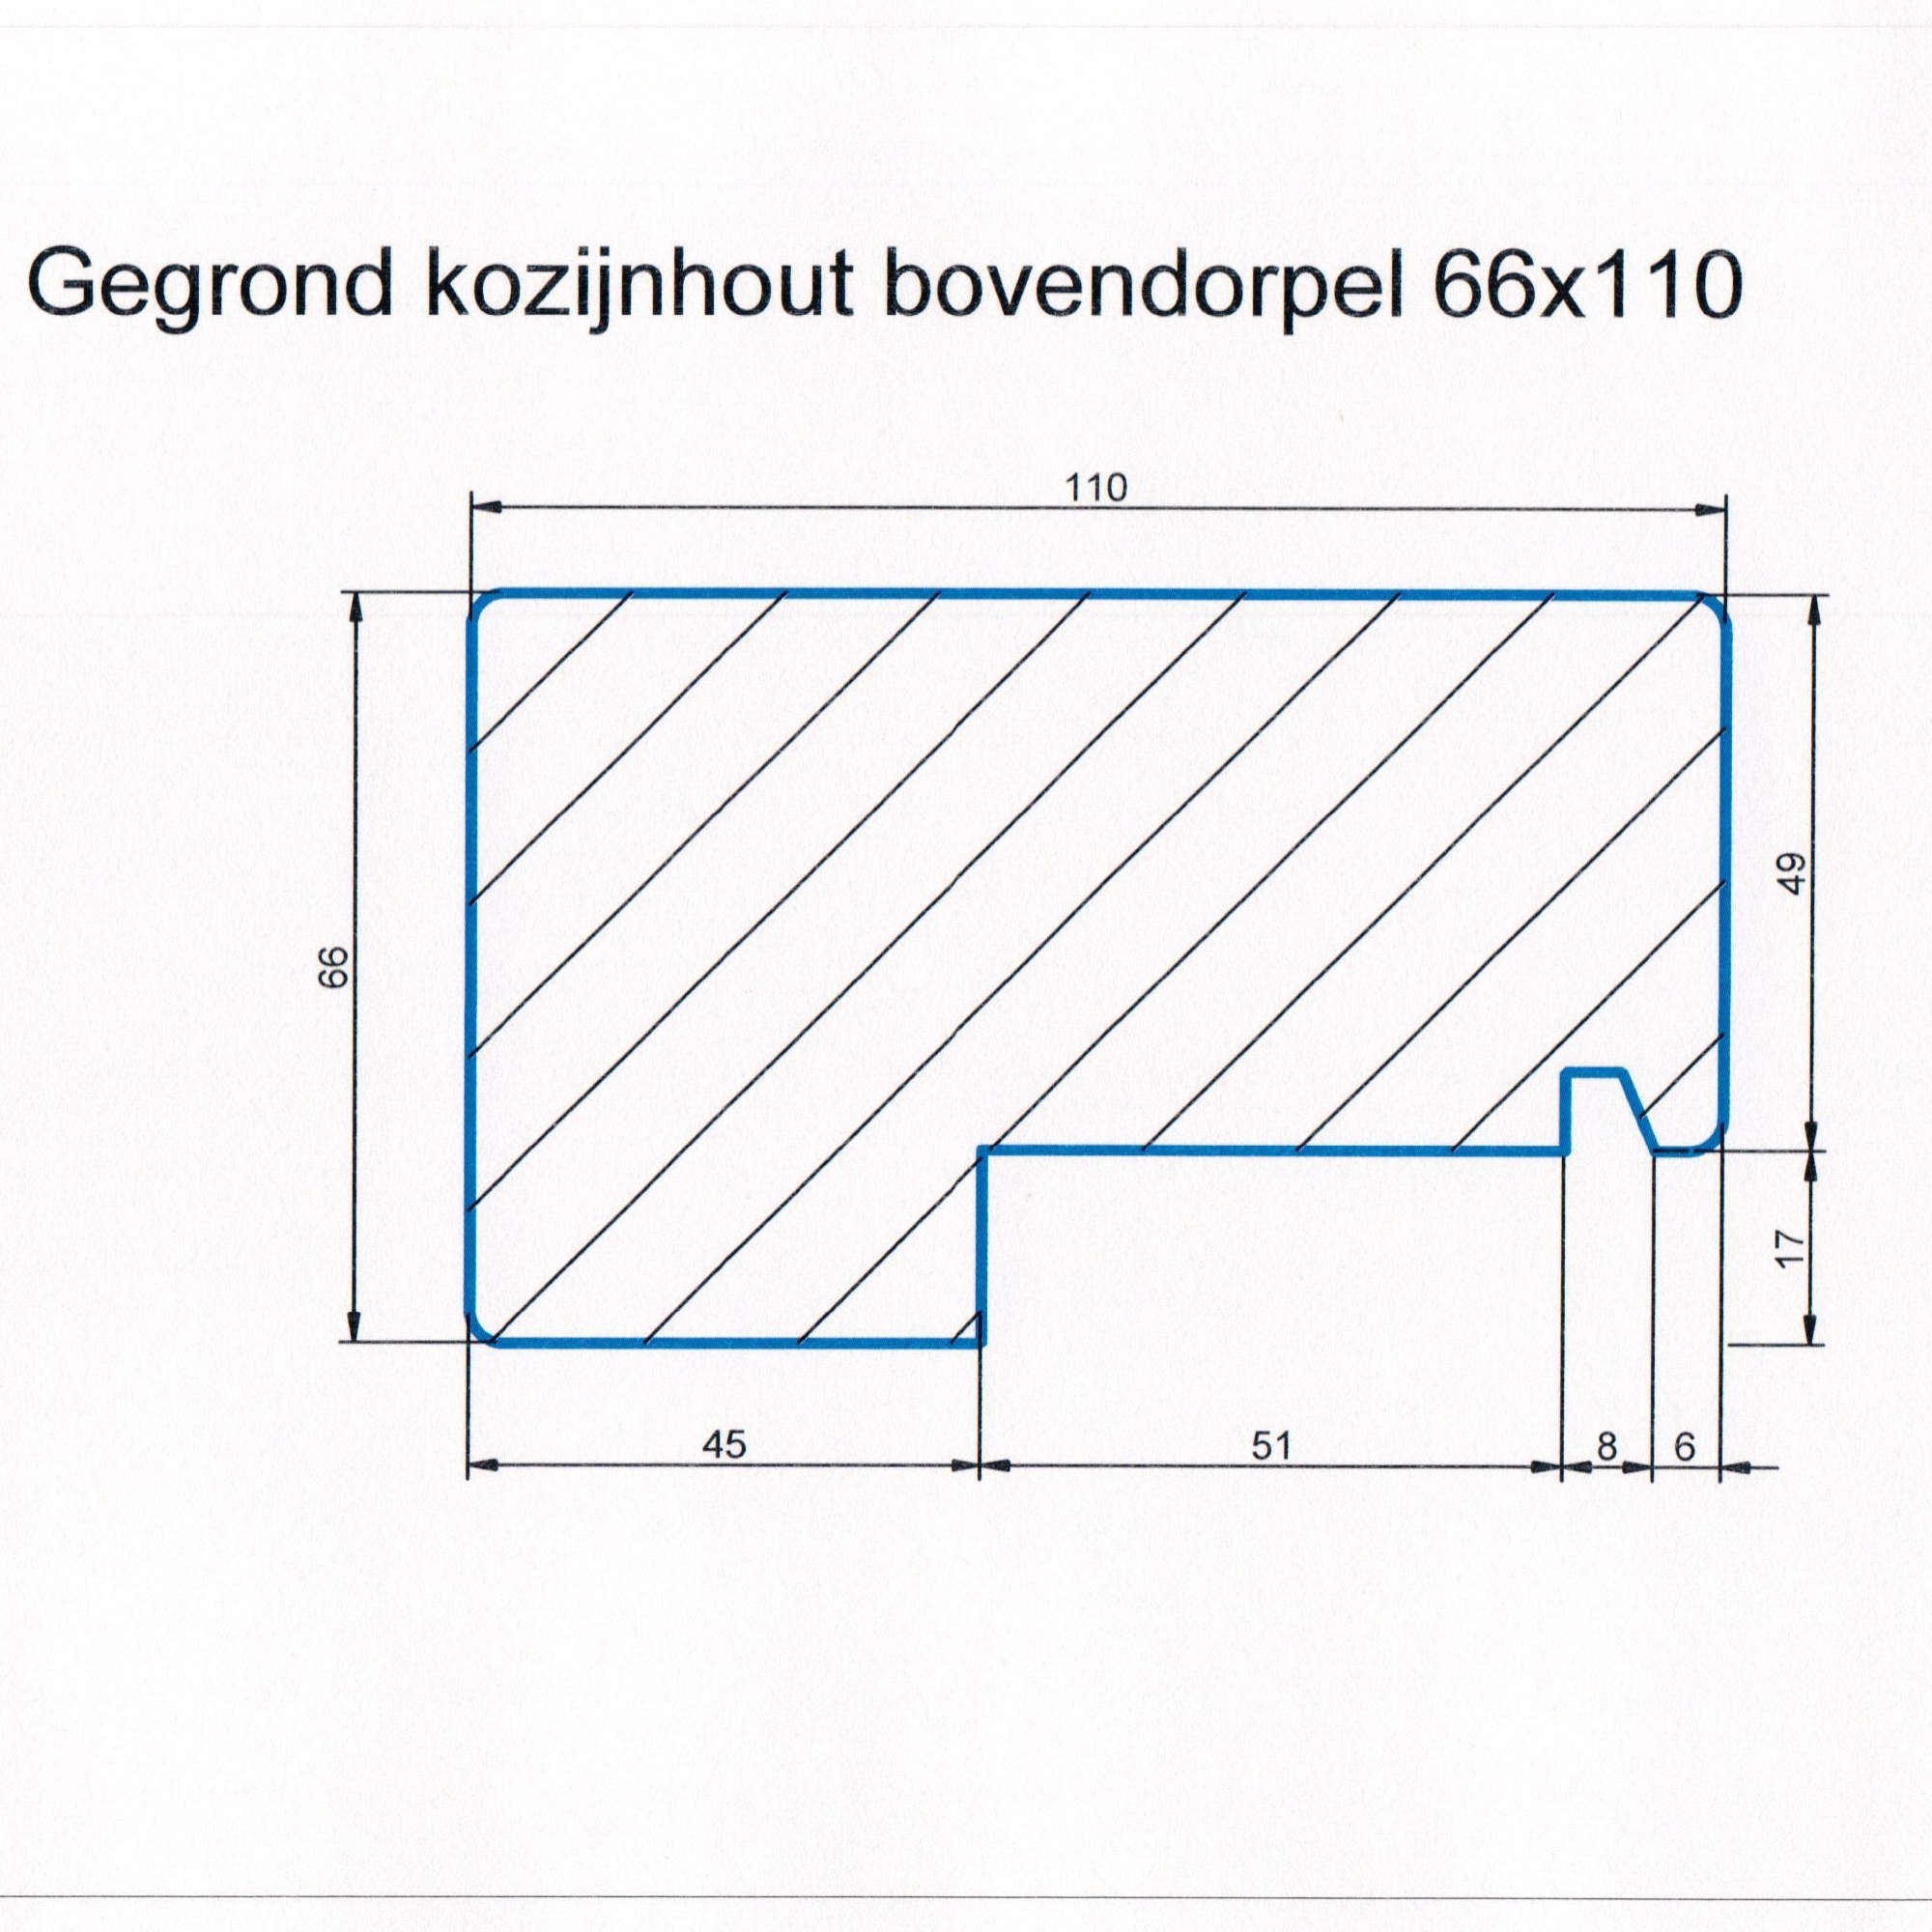 Hardhout 66x110 kozijnhout gegrond L=1180 bovendorpel